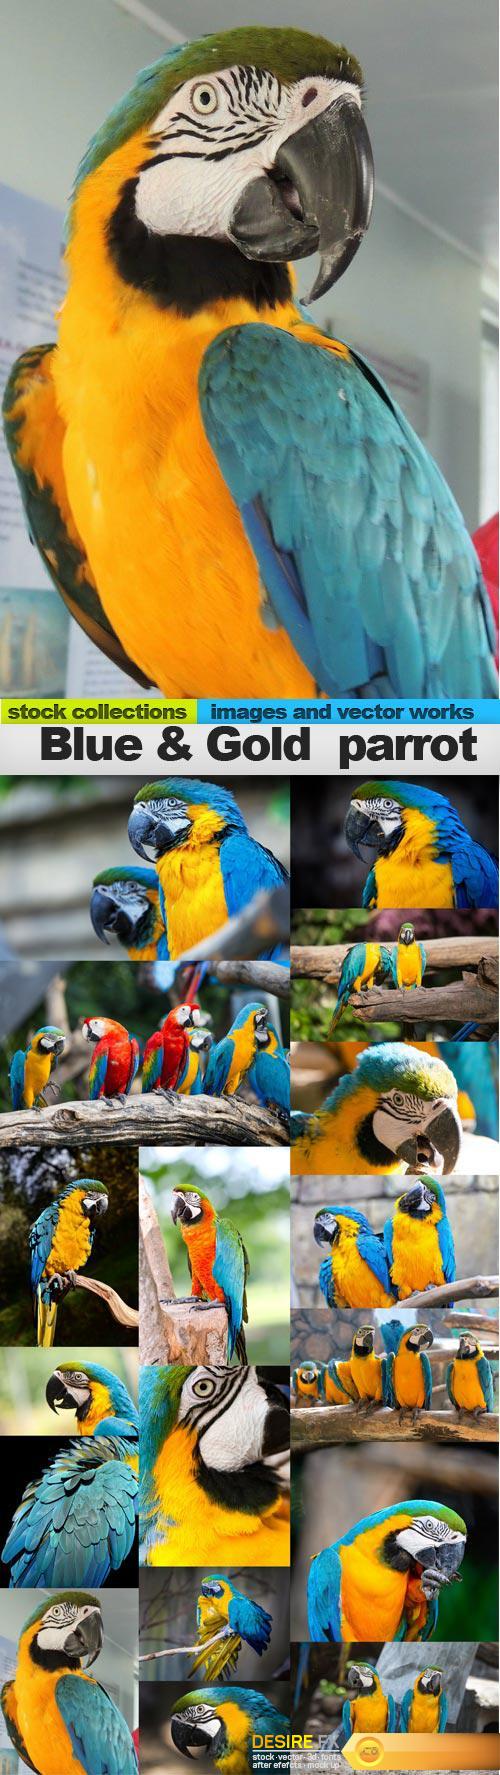 Blue & Gold  parrot,17 x UHQ JPEG